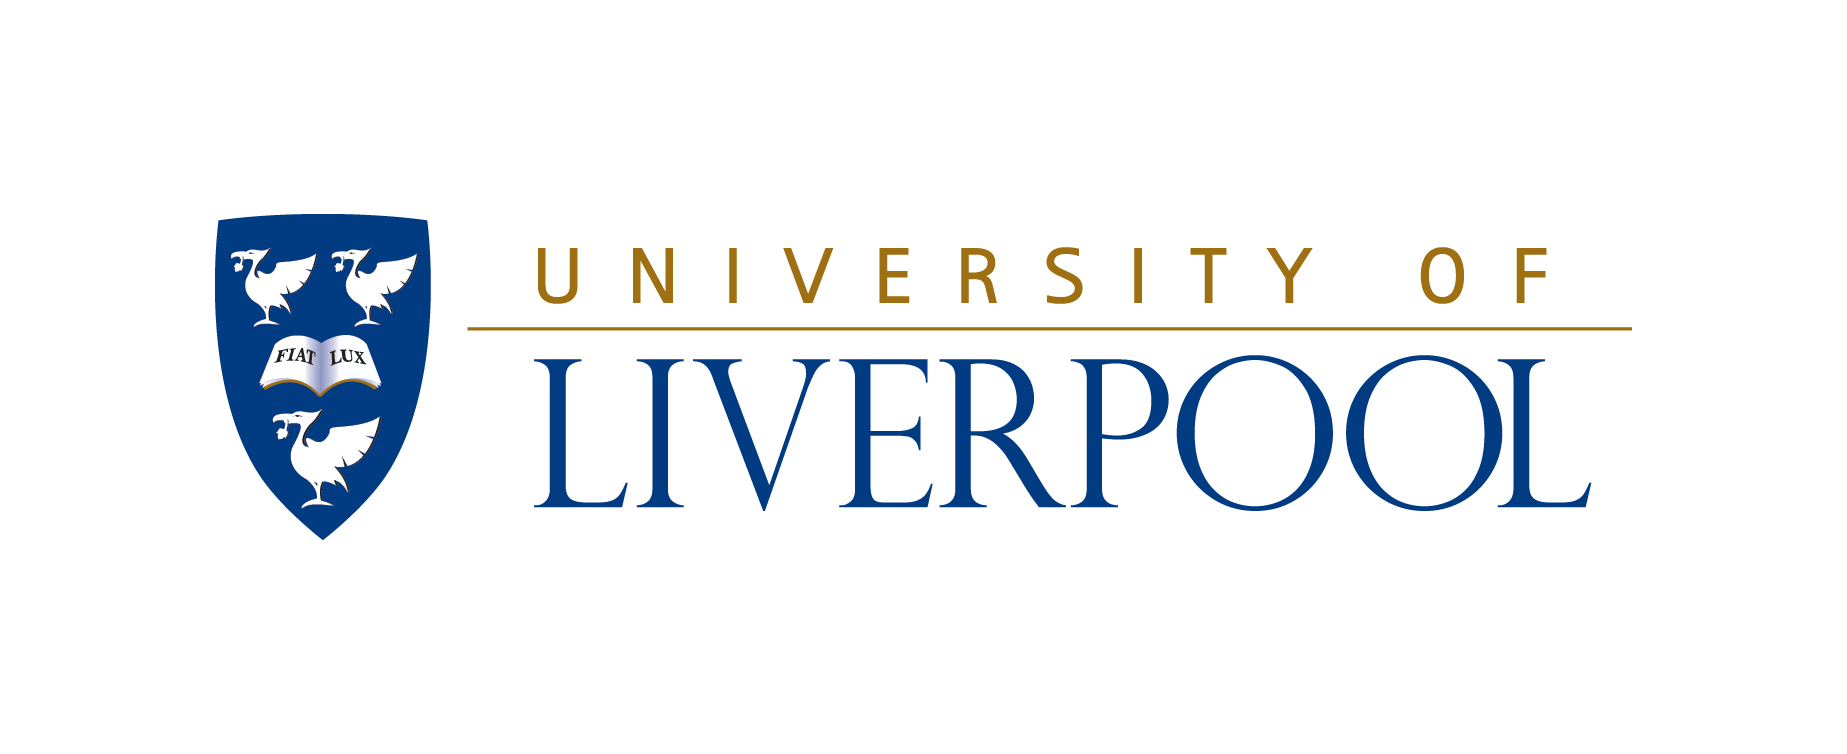 Liverpool, University of